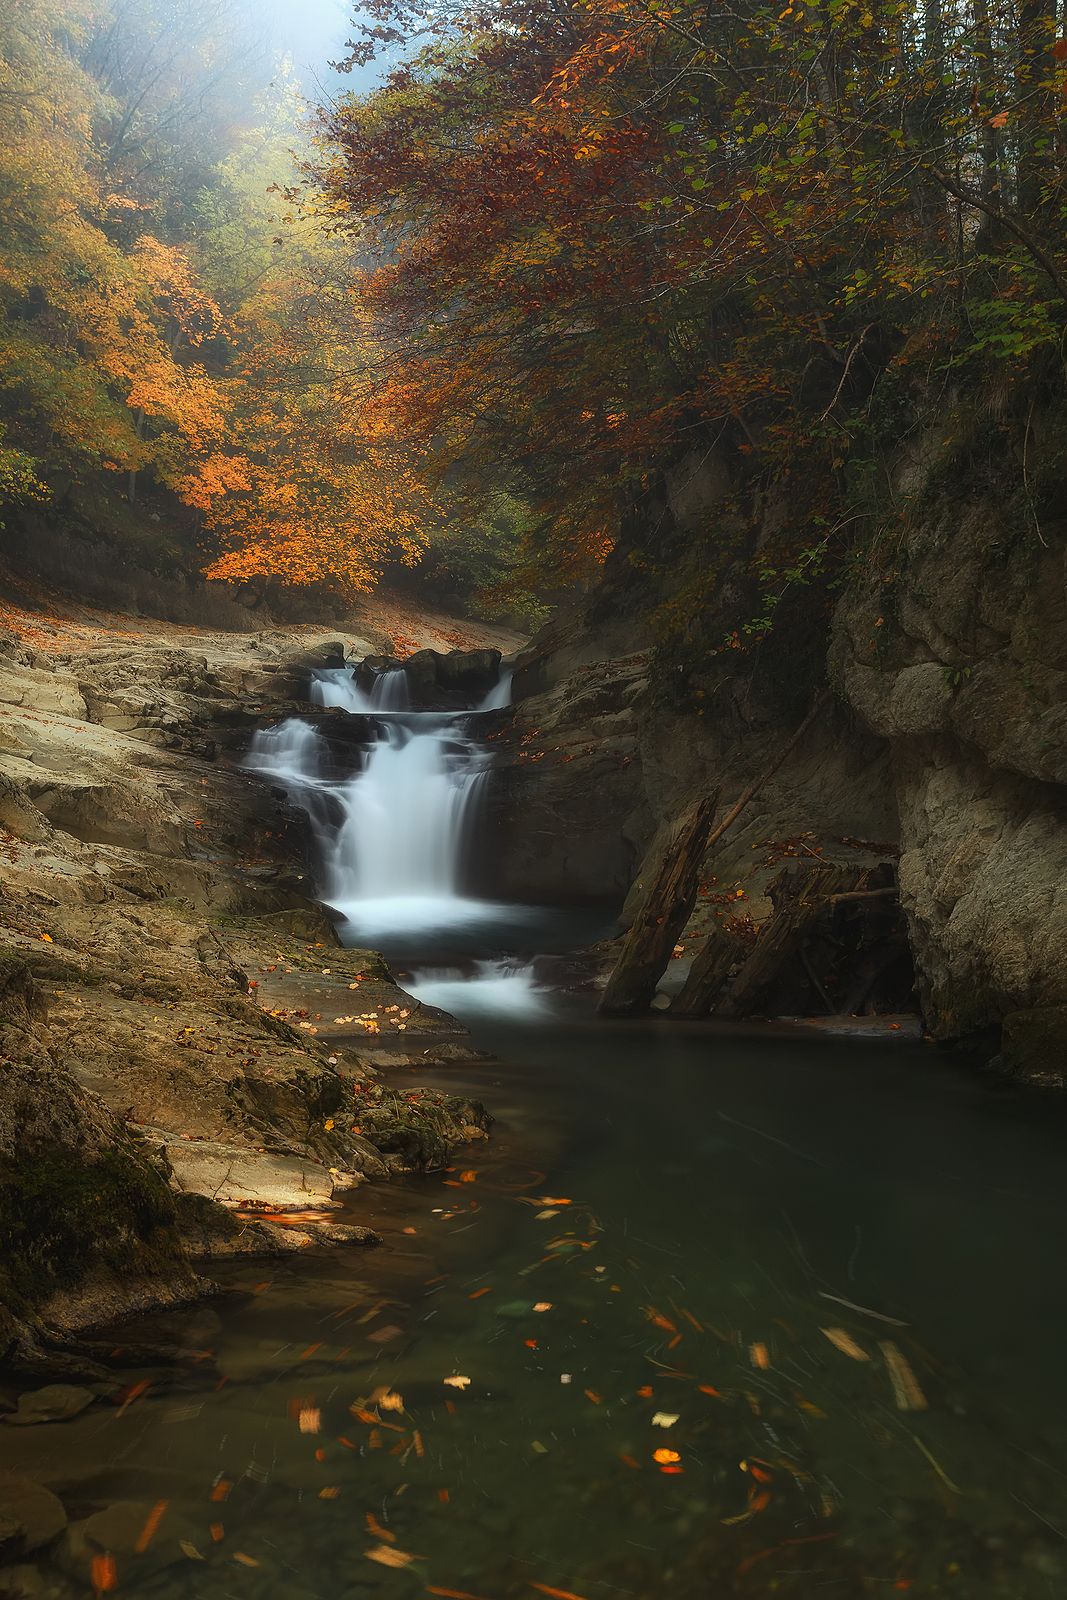 Una gran lugar para disfrutar del otoño: la Selva de Irati